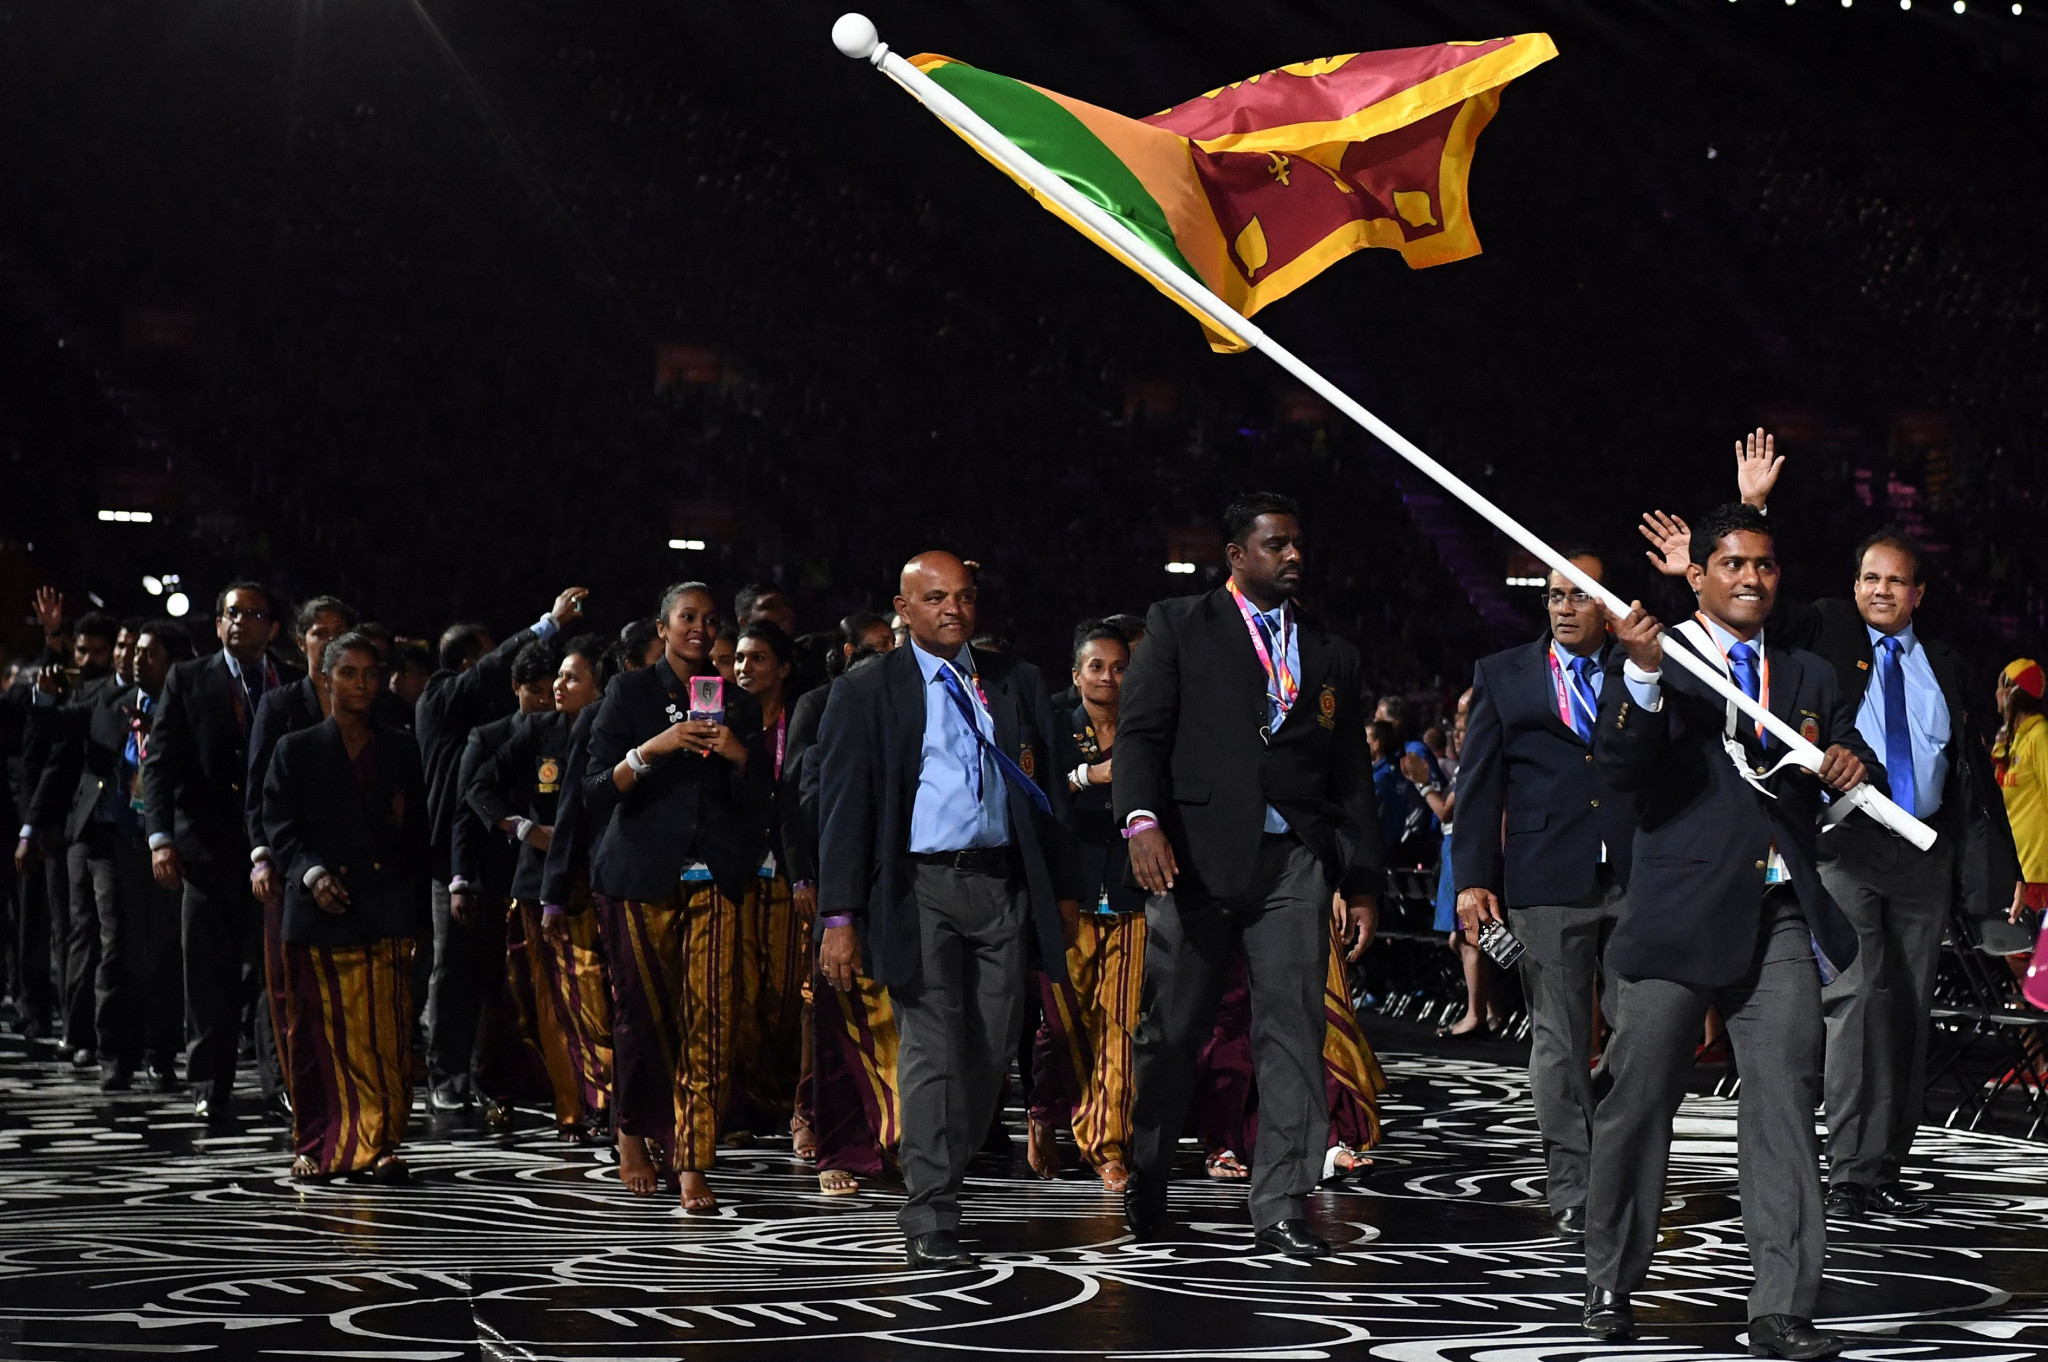 Three Sri Lanka team members attempt to flee at Birmingham 2022 Commonwealth Games